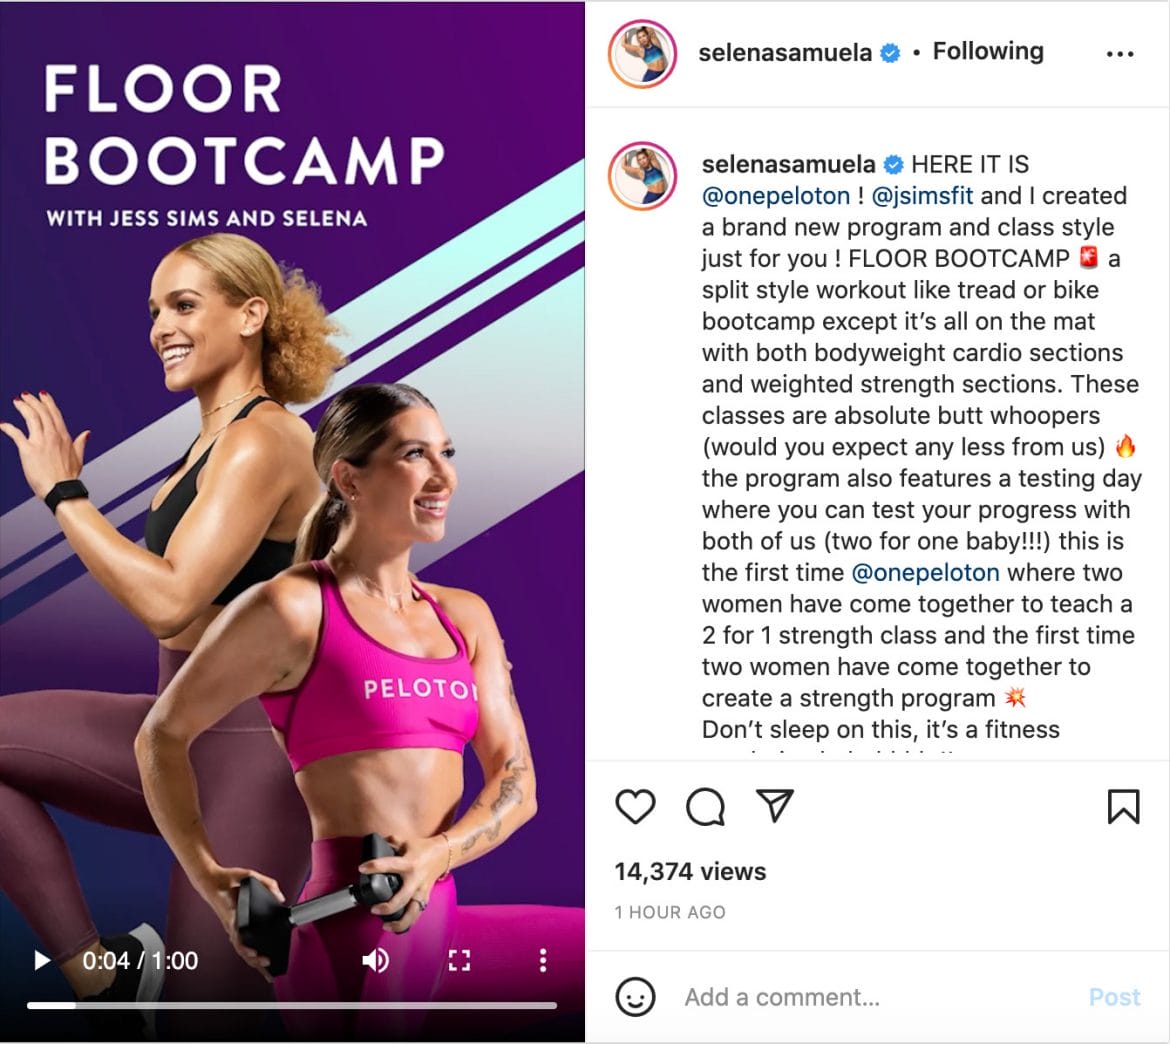 Selena Samuela's Instagram post announcing the new Floor Bootcamp program.